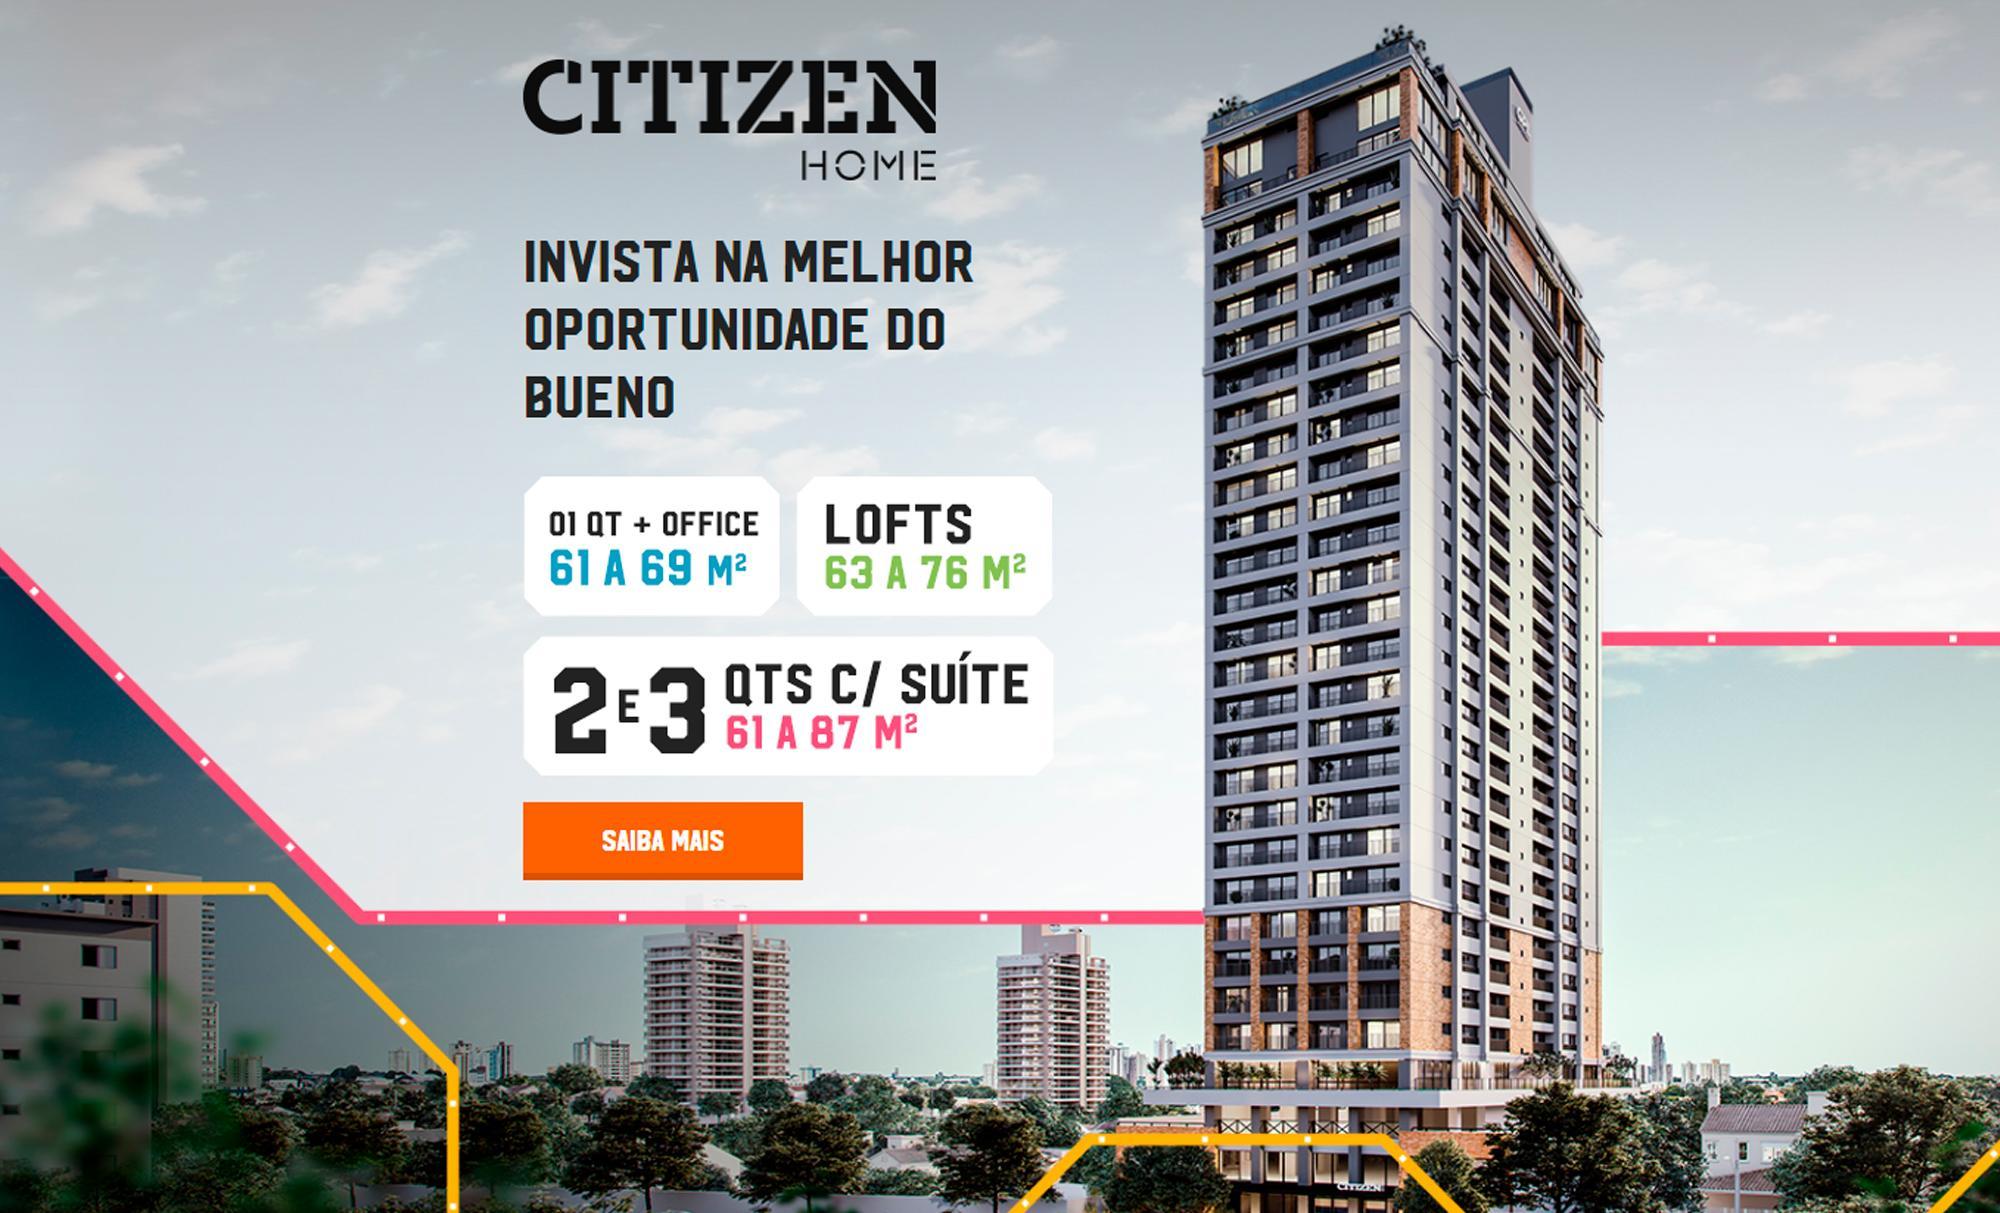 Citizen Home Bueno - Cliente AsWEb